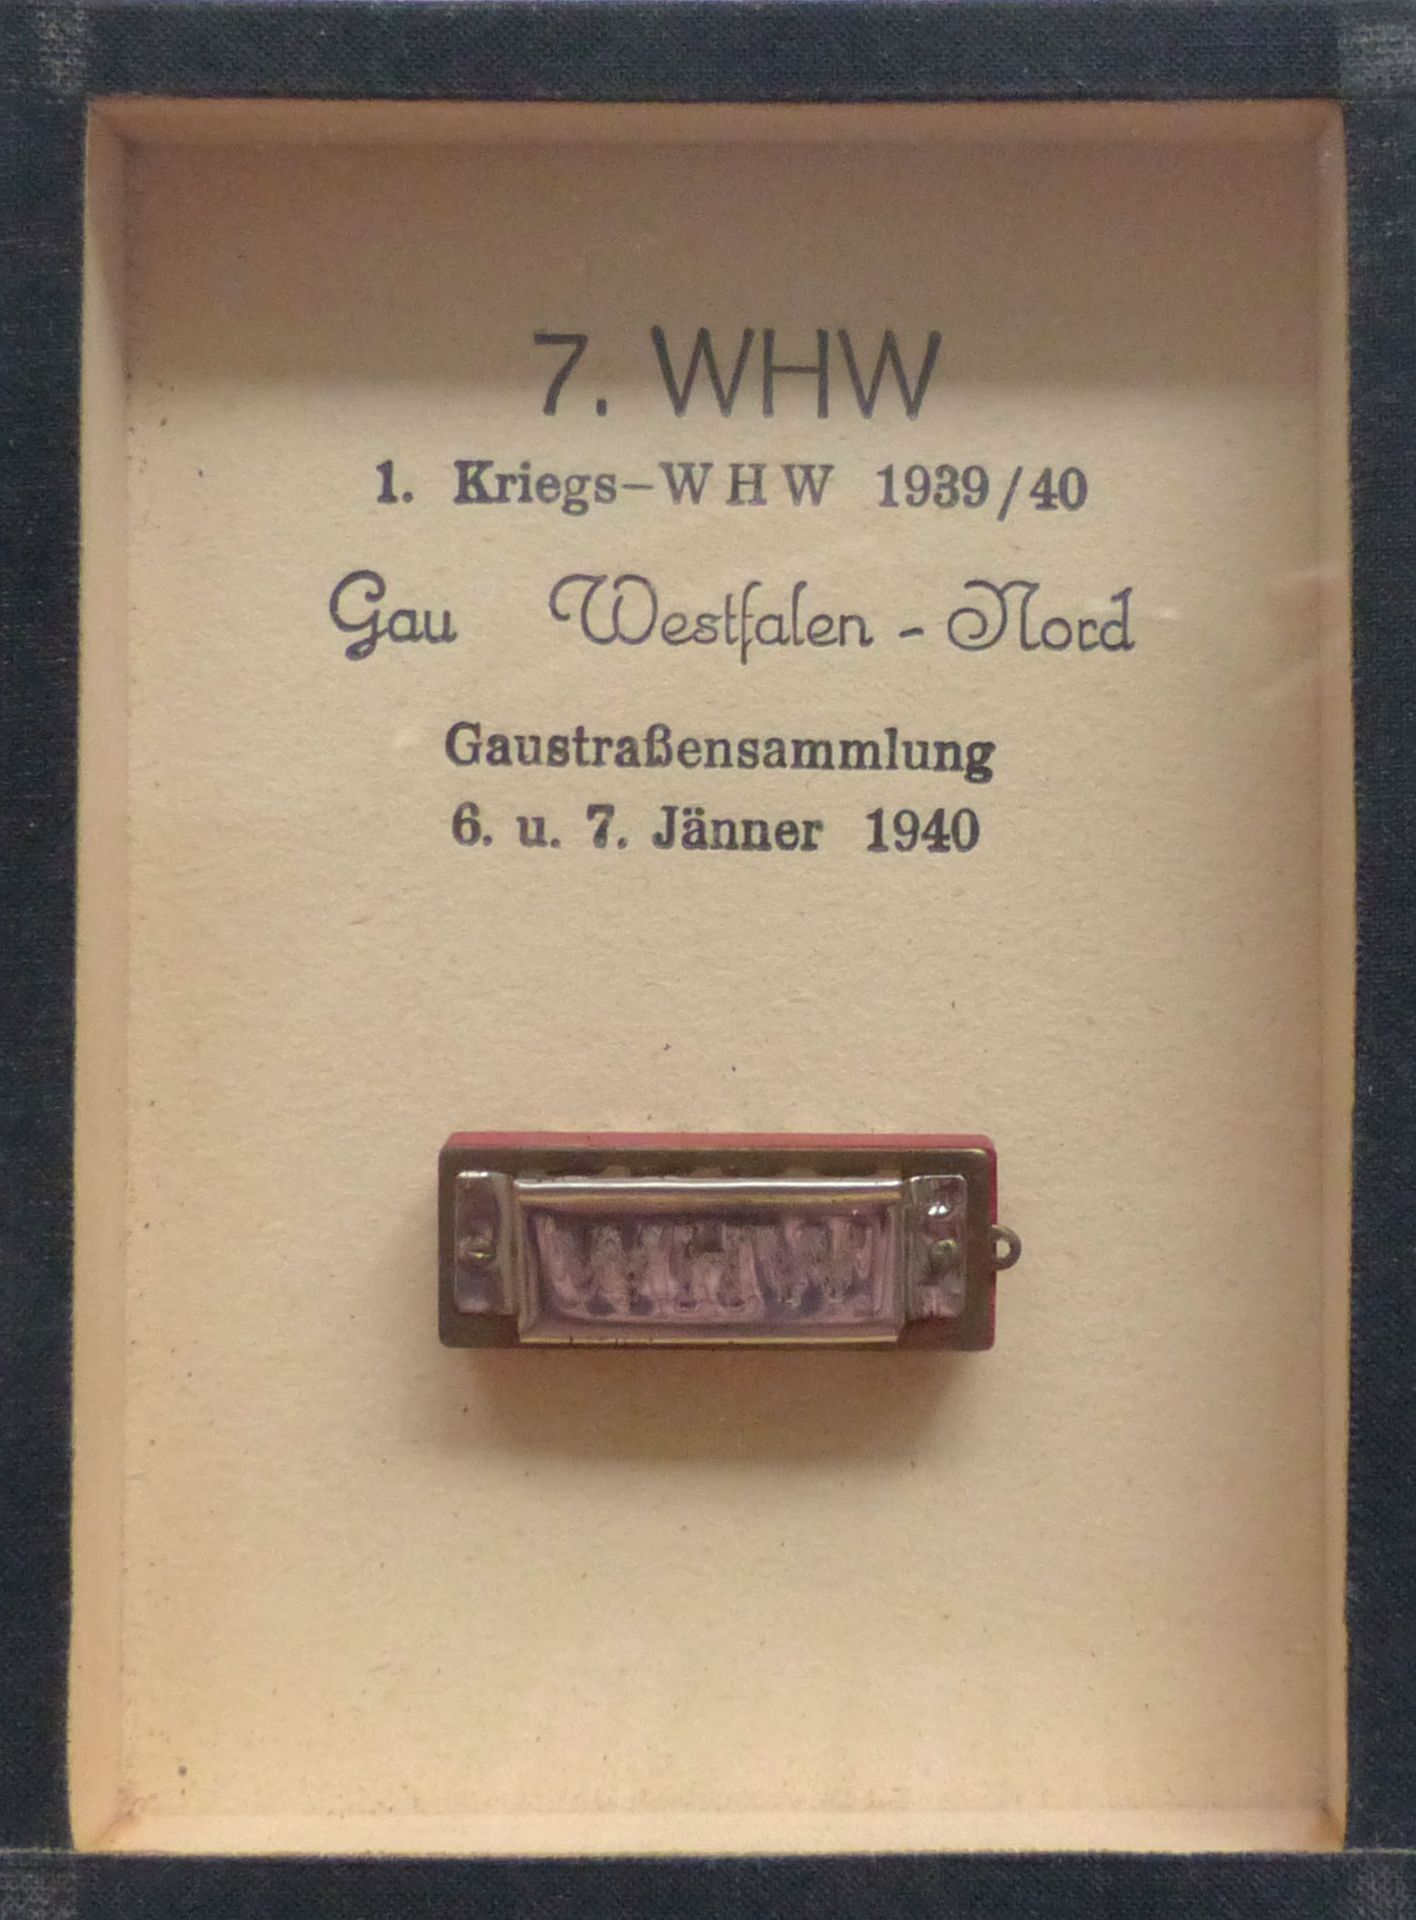 WHW Gau Westfalen-Nord Gaustraßensammlung Januar 1940 Mundharmonika im Rahmen 9x12 cm I-II